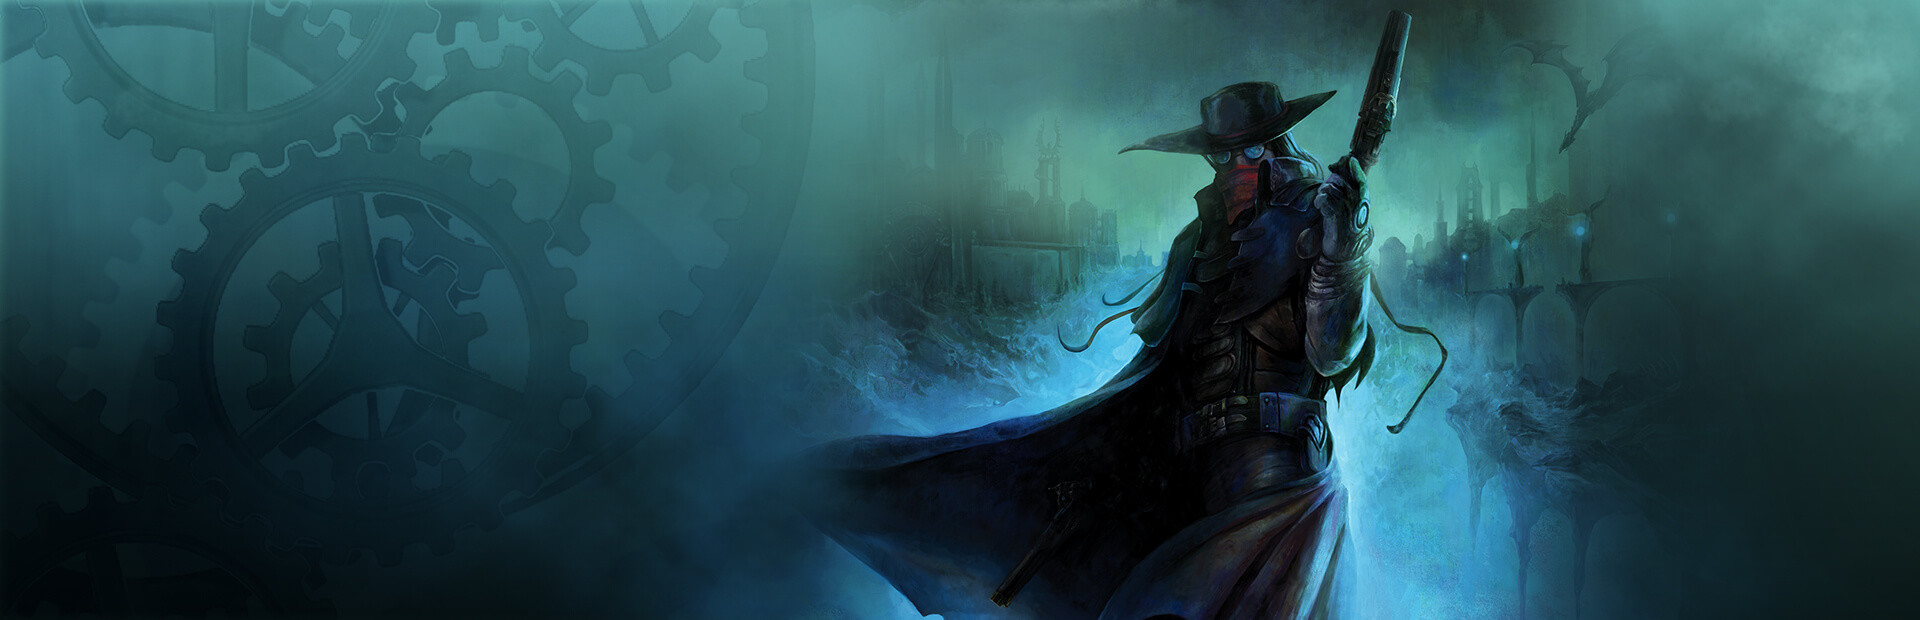 The Incredible Adventures of Van Helsing: Final Cut cover image